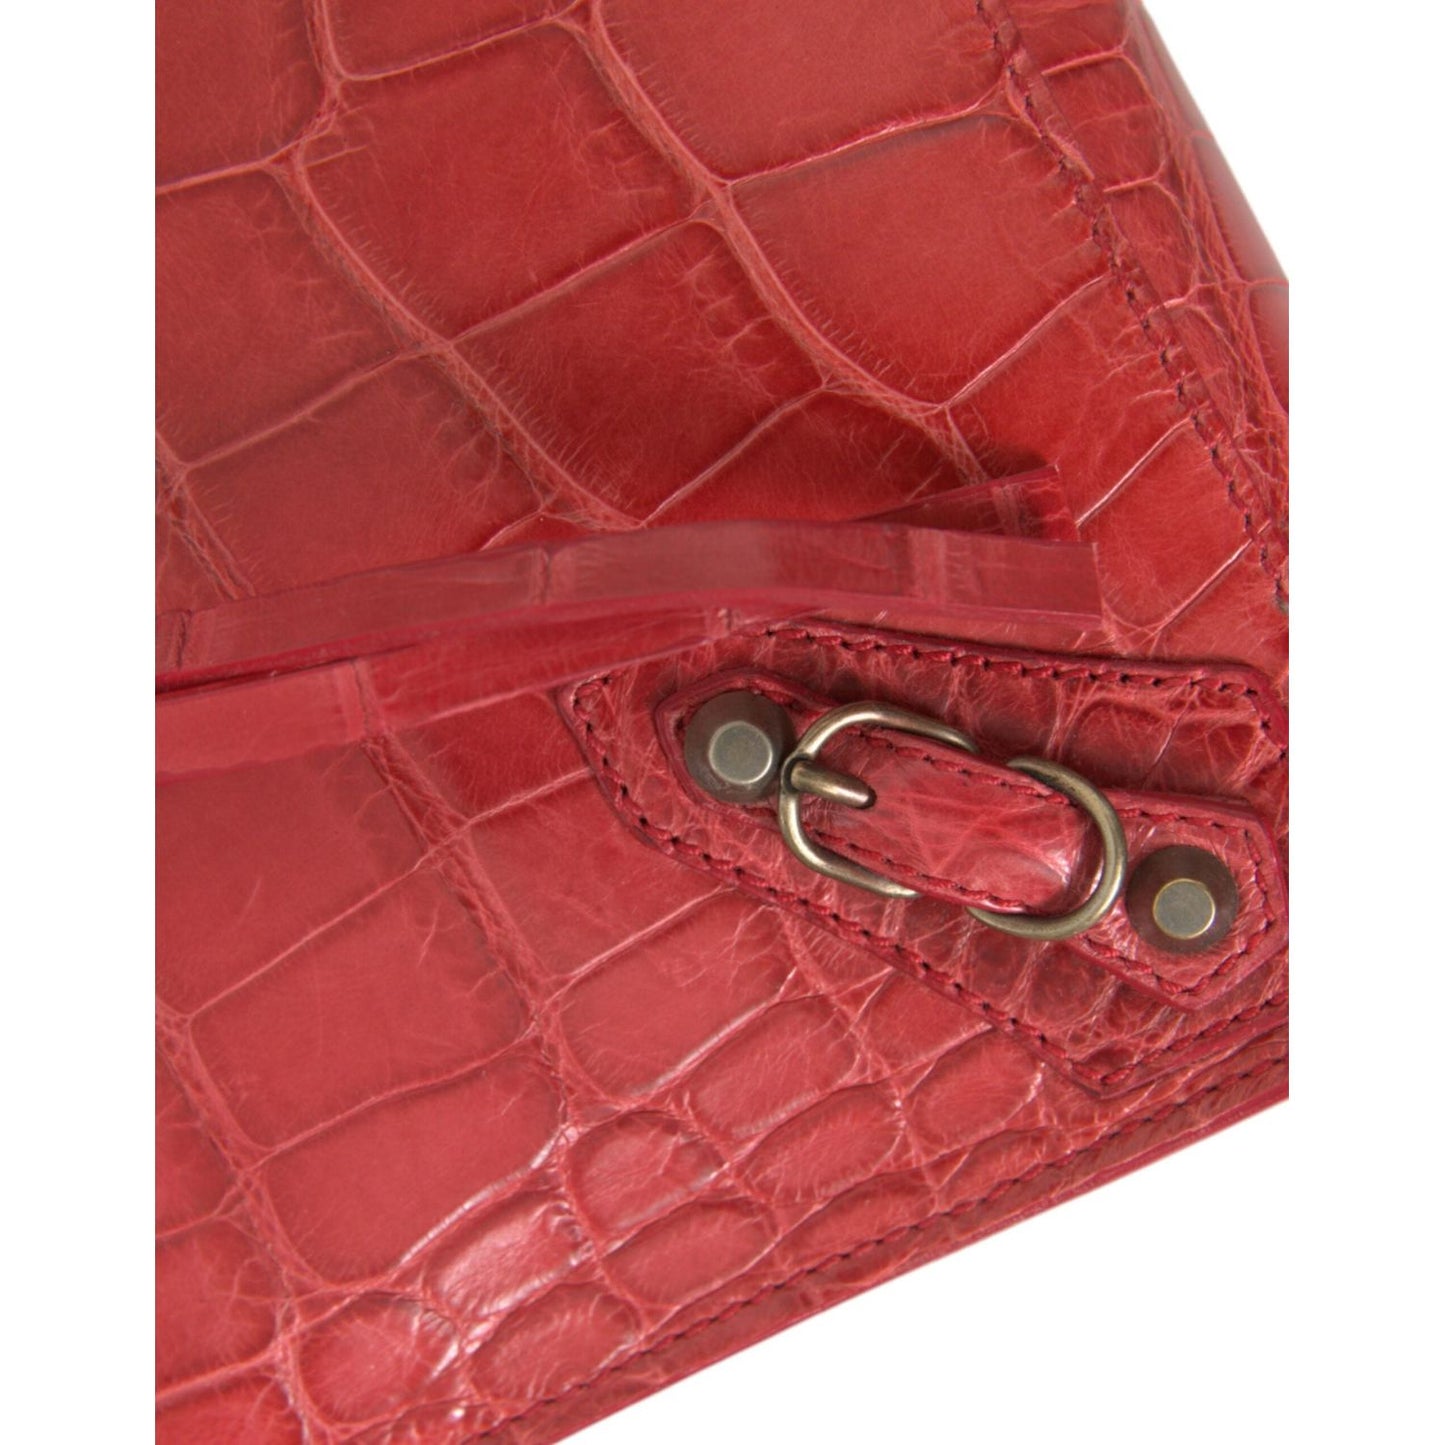 Balenciaga Exotic Red Alligator Leather Clutch exotic-red-alligator-leather-clutch